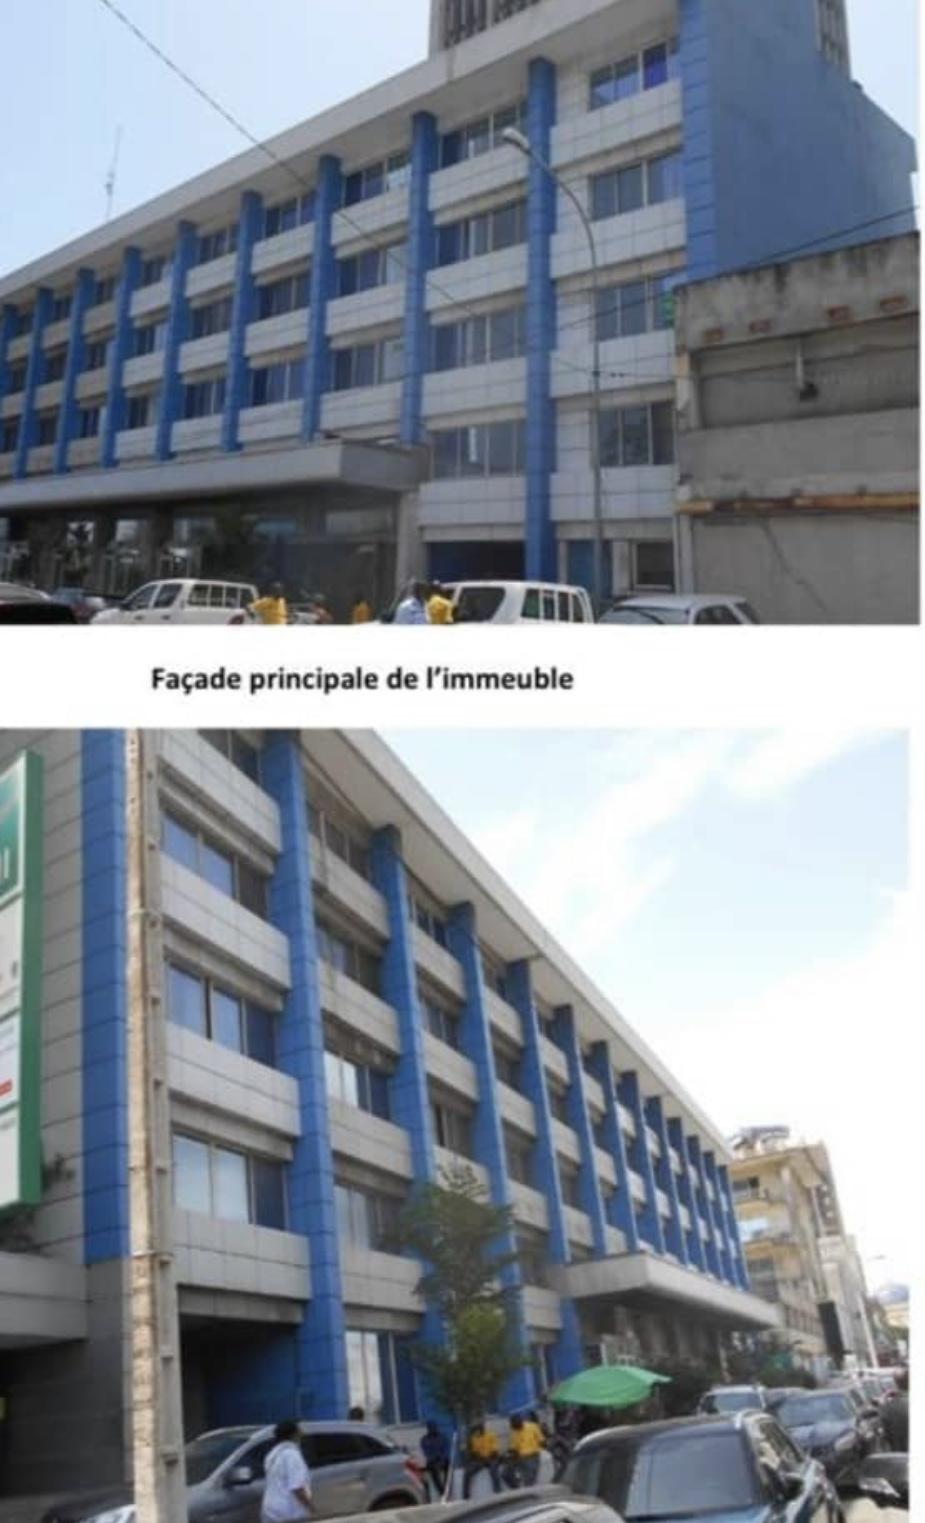 Vente d'un Immeuble à 8.000.000.000 FCFA  : Abidjan-Plateau (Plateau )